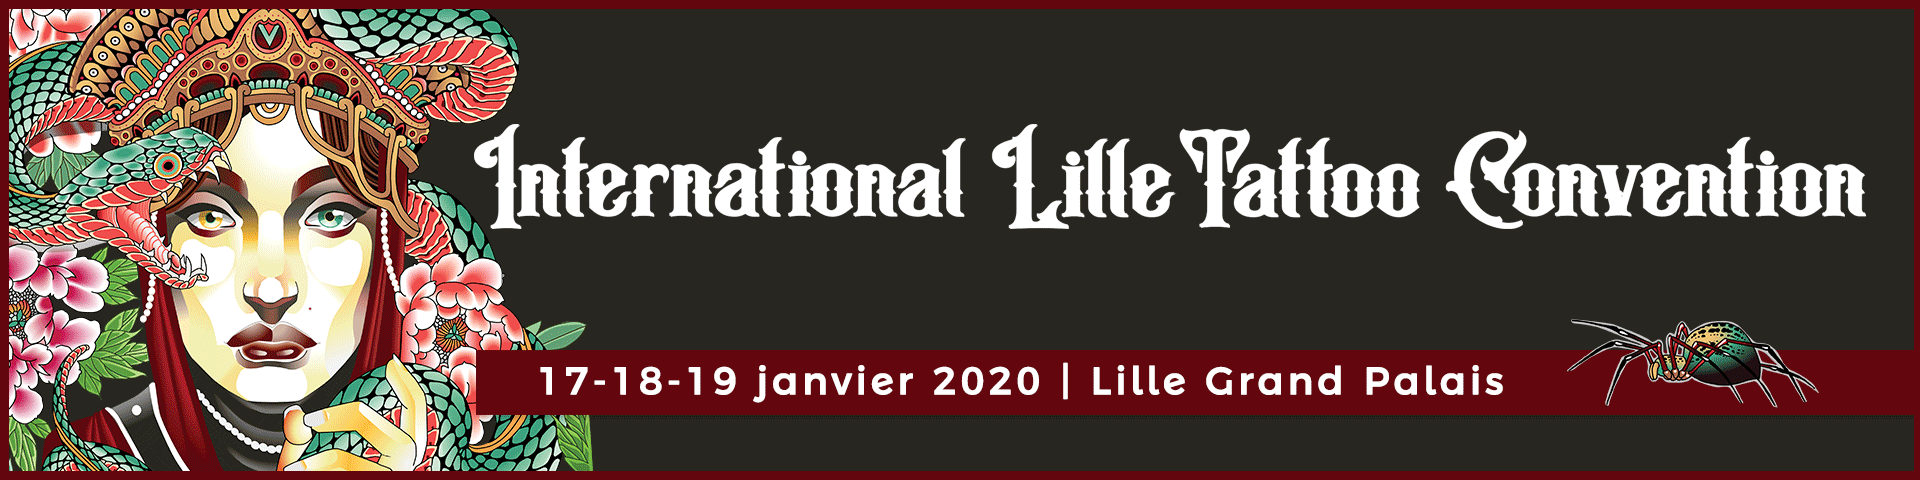 hebergement-International-Lille-Tattoo-convention-France-2020